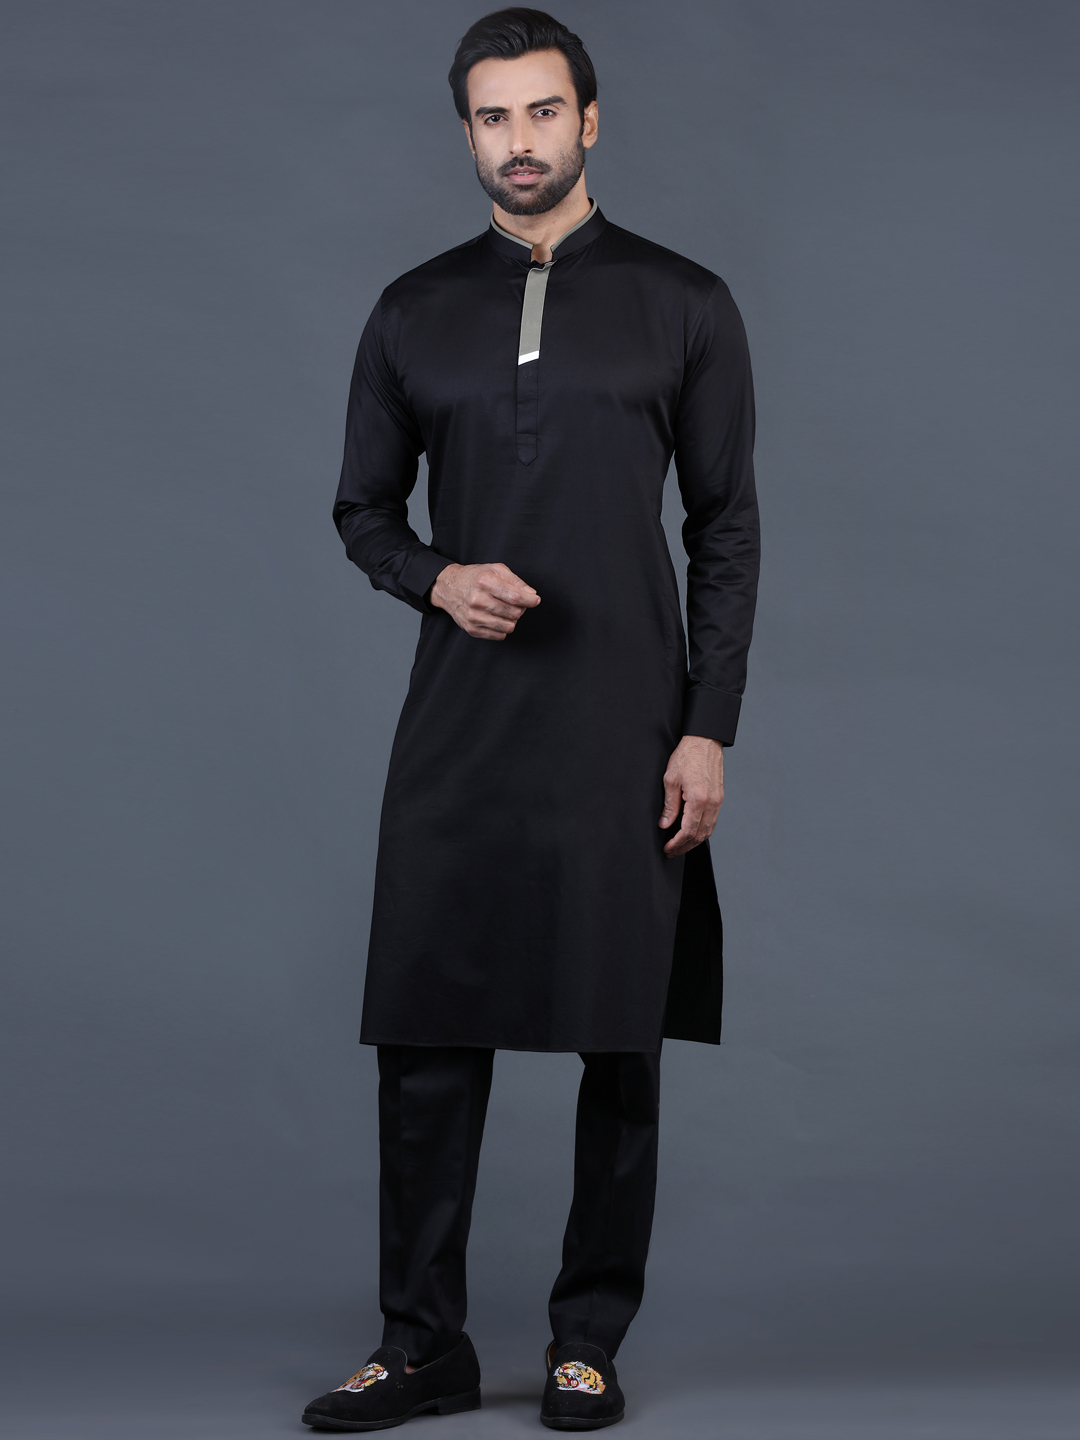 Buy Gazelle & Stag Men's Regular Cotton Pathani Suit/Pathani Kurta Set  Classic Collar Color Royal Blue at Amazon.in